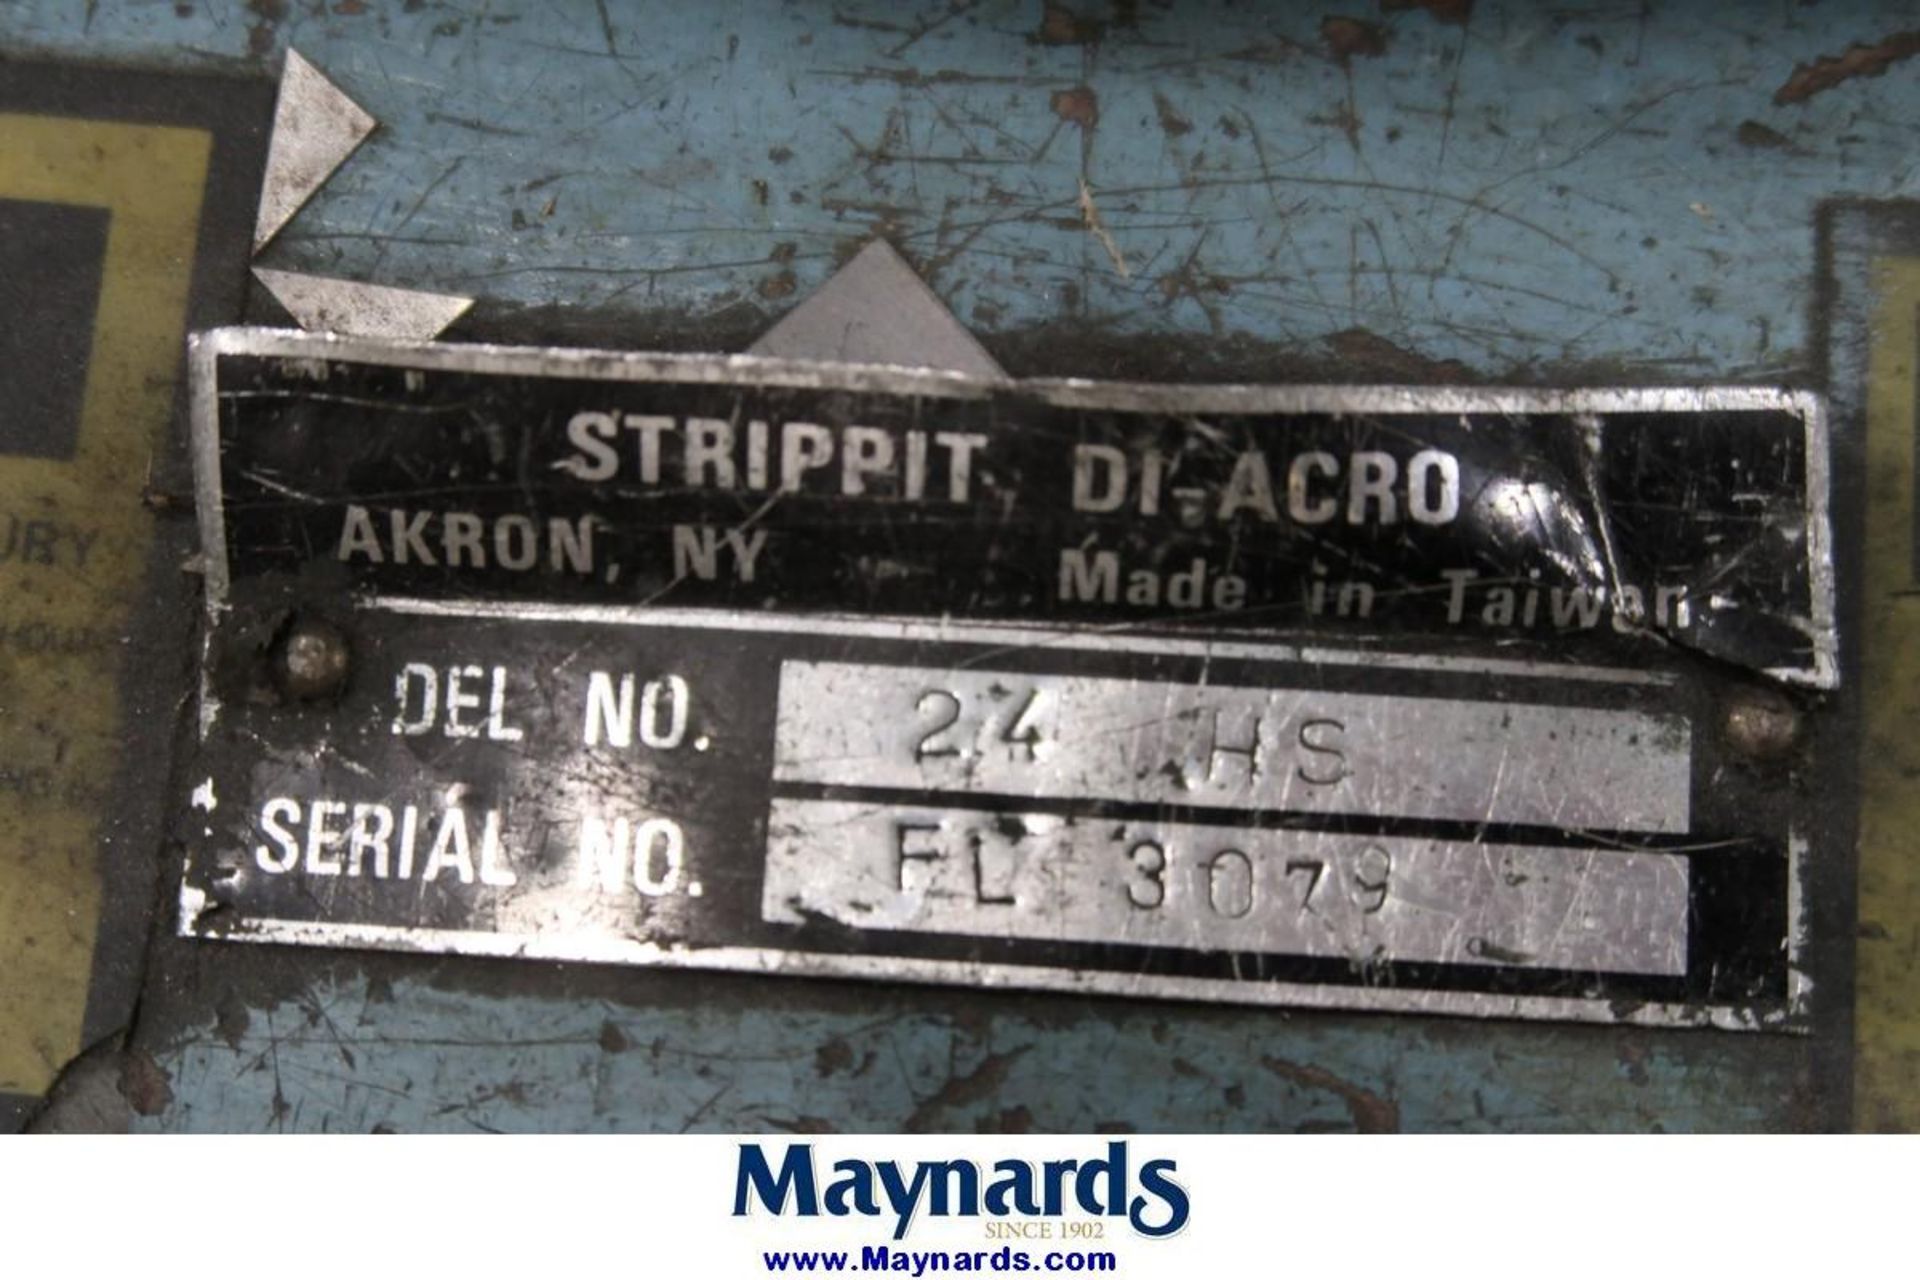 Strippit Diacro 24 HS 24" x 16 GA. Hand Shear - Image 4 of 4